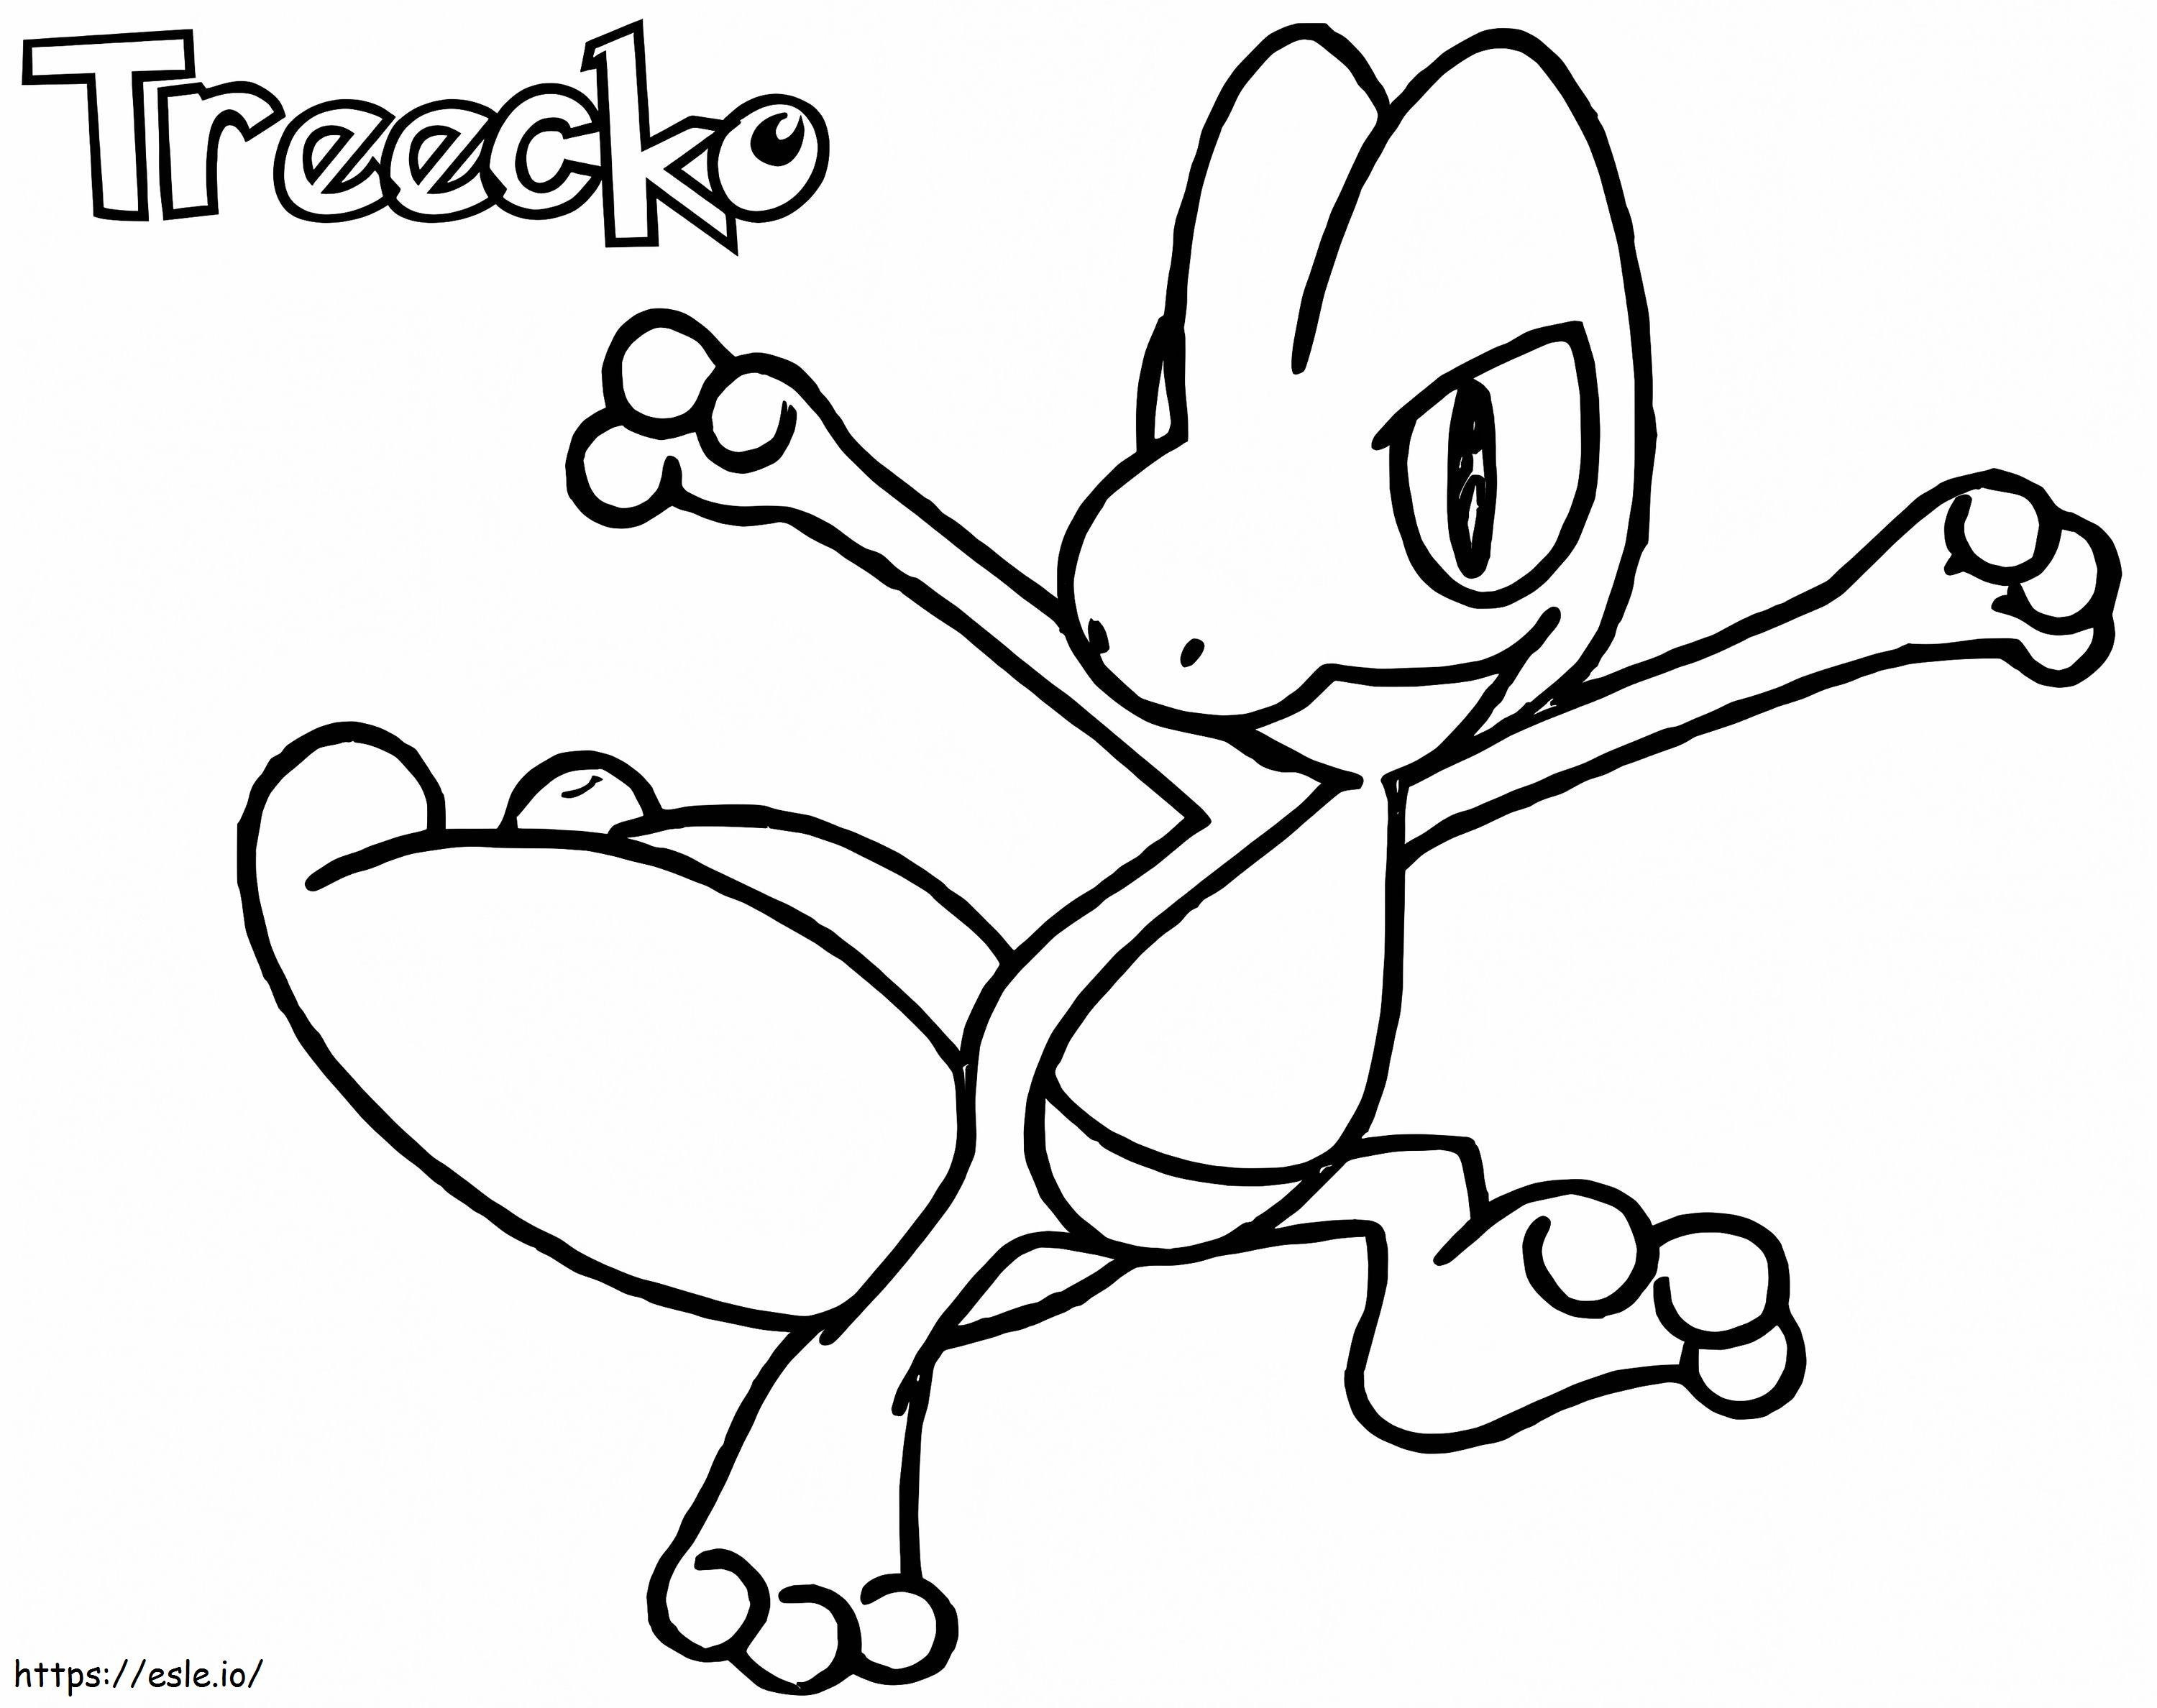 Printable Treecko Pokemon coloring page